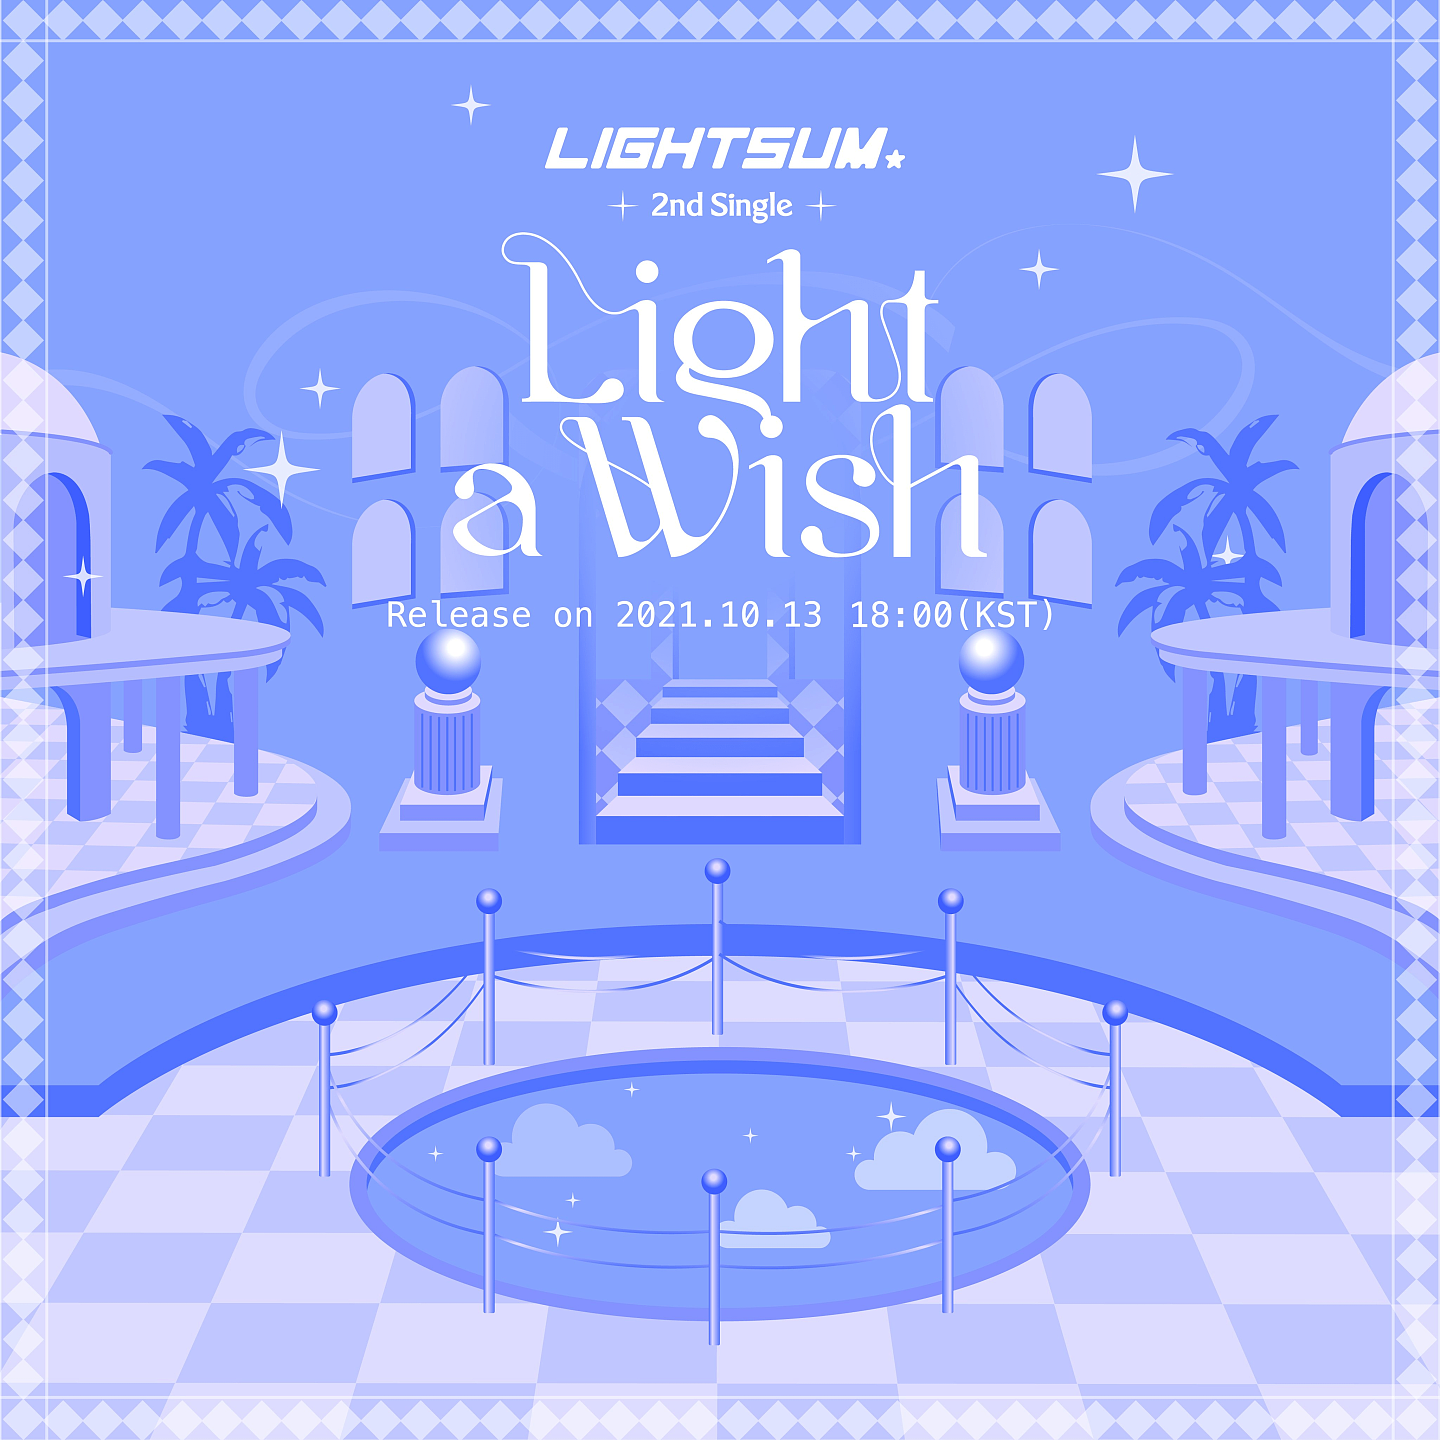 LIGHTSUM官方公开第二张单曲《Light a Wish》预告 将于10月13日回归！ - 1